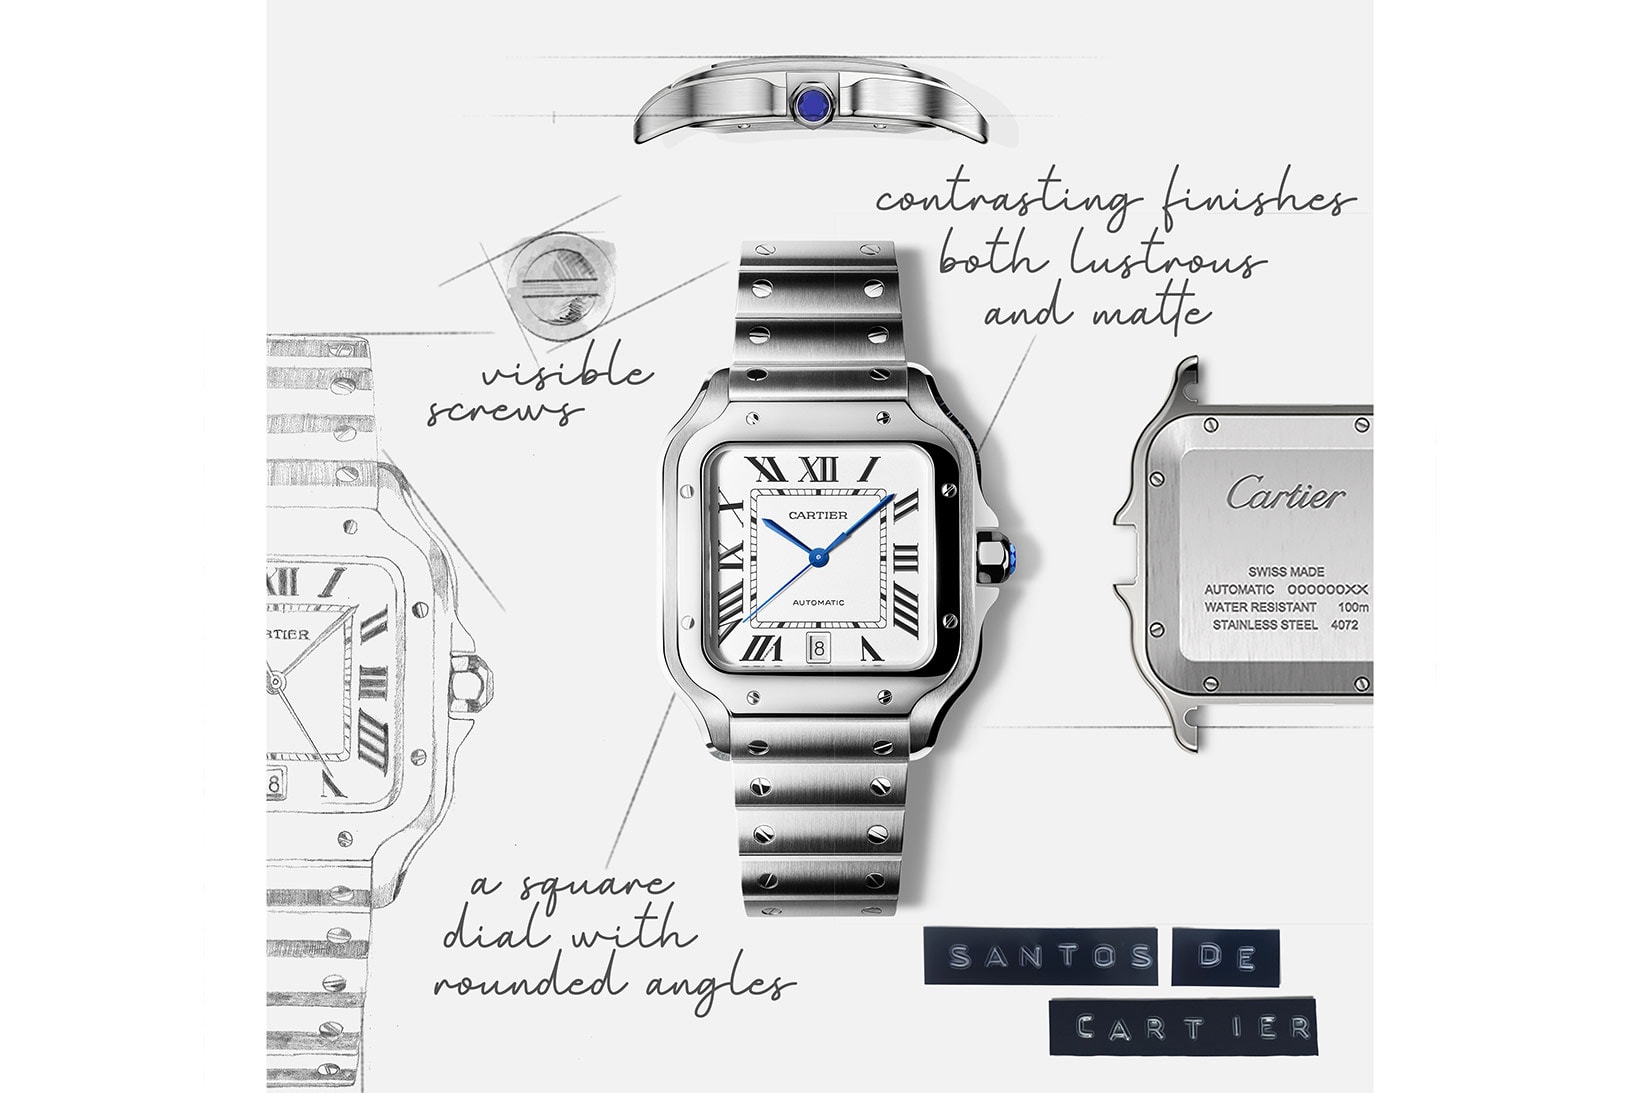 santos de cartier designer wristwatch the culture of design campaign